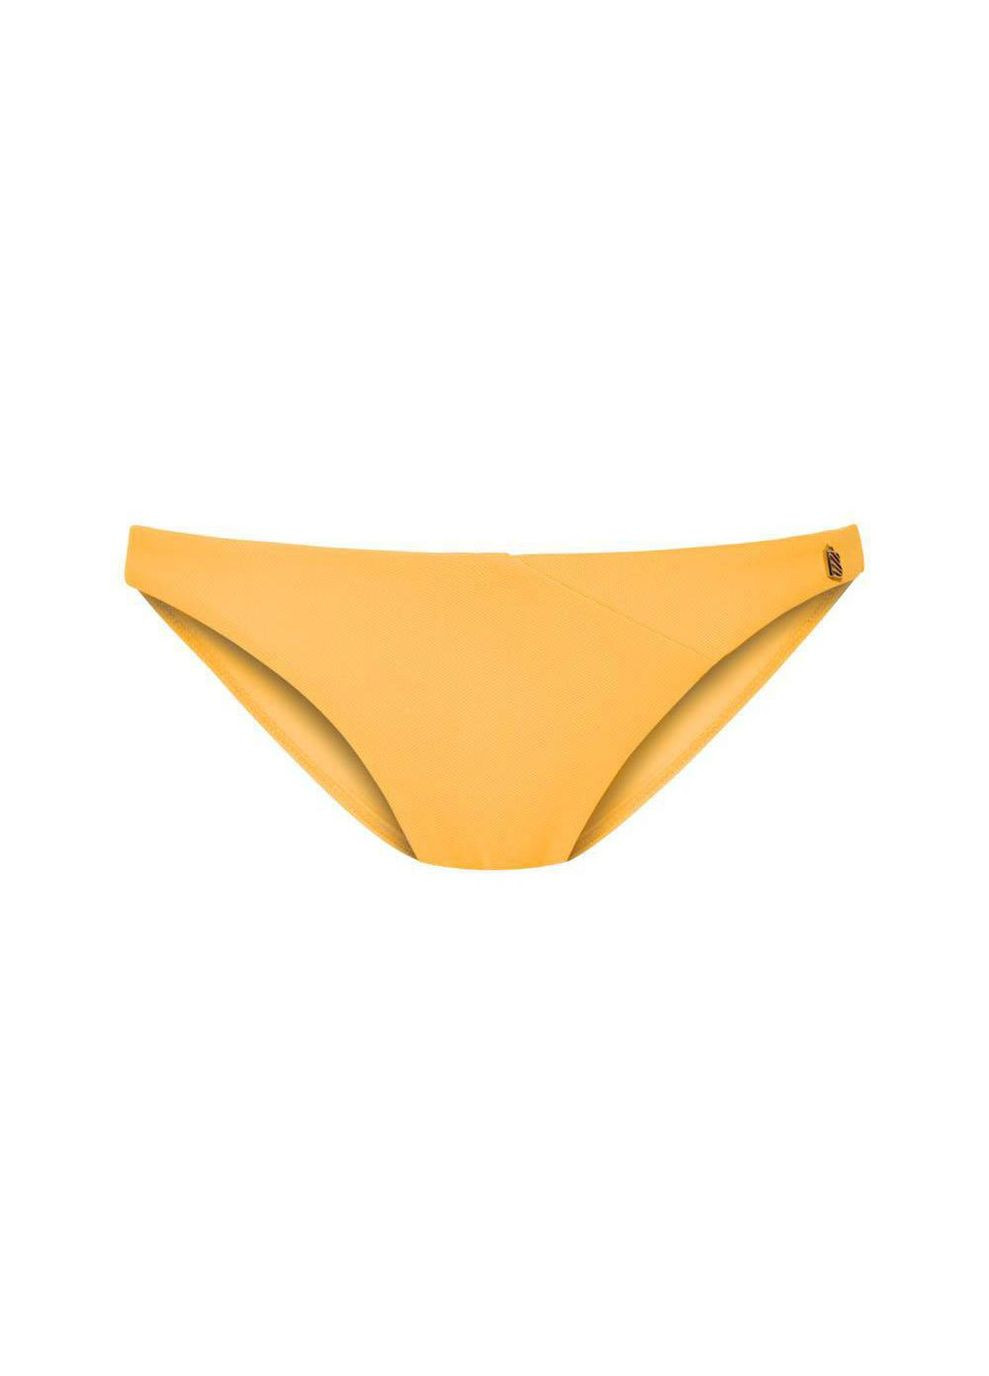 Желтые трусы купальные женские 38/s желтый 070207-160 Beachlife